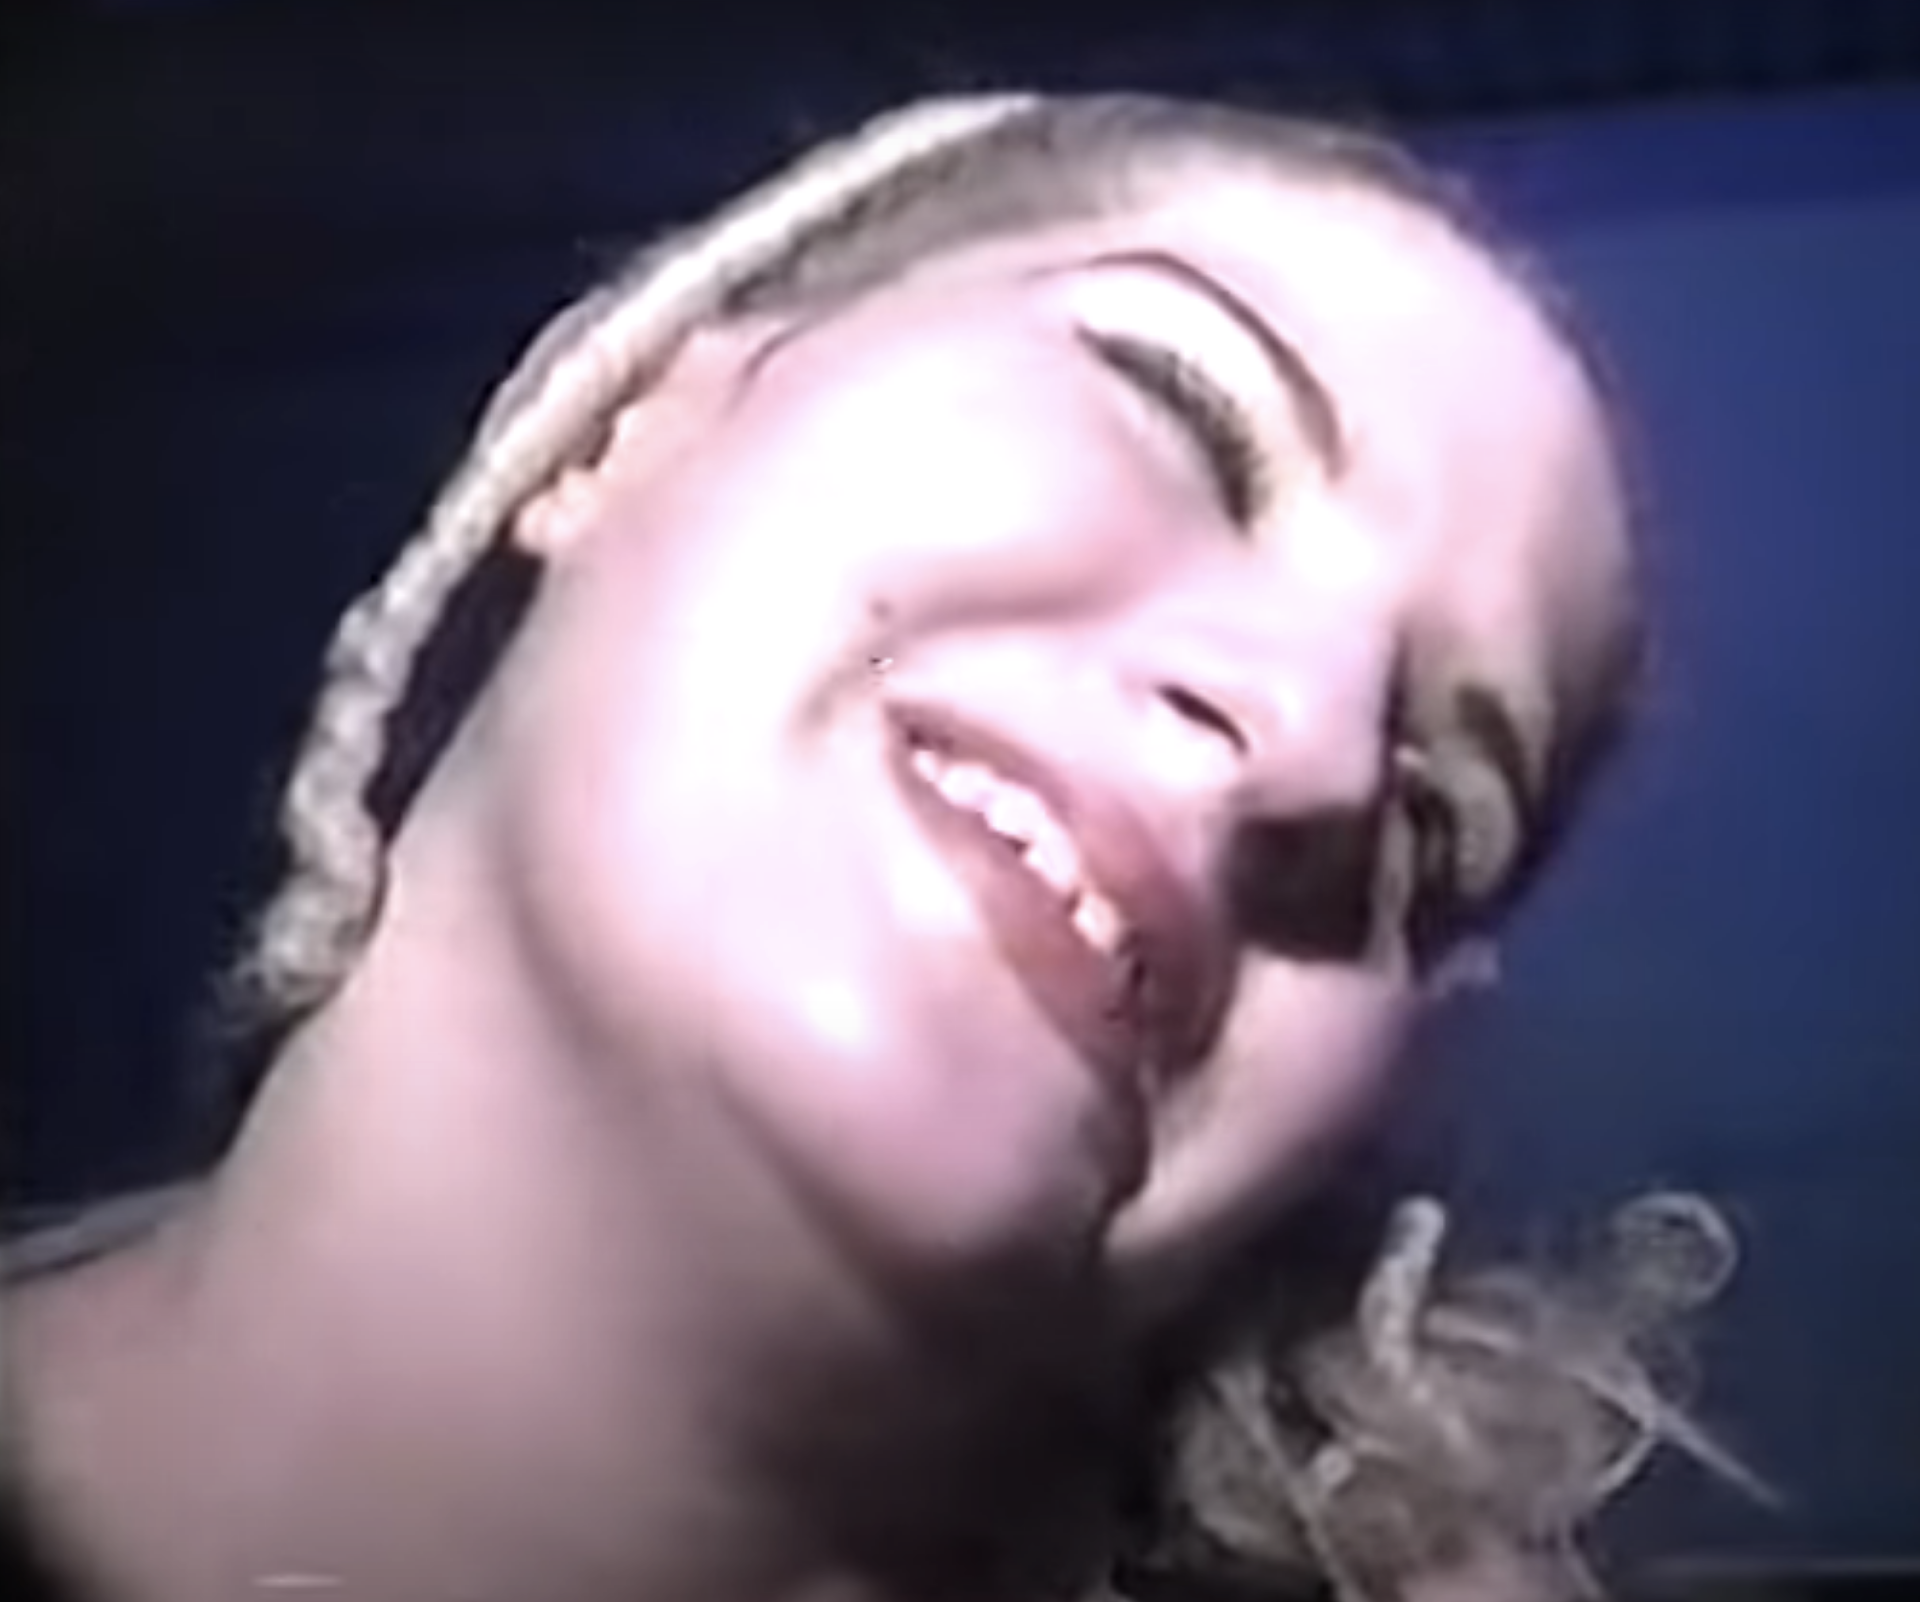 closeup of a woman smiling